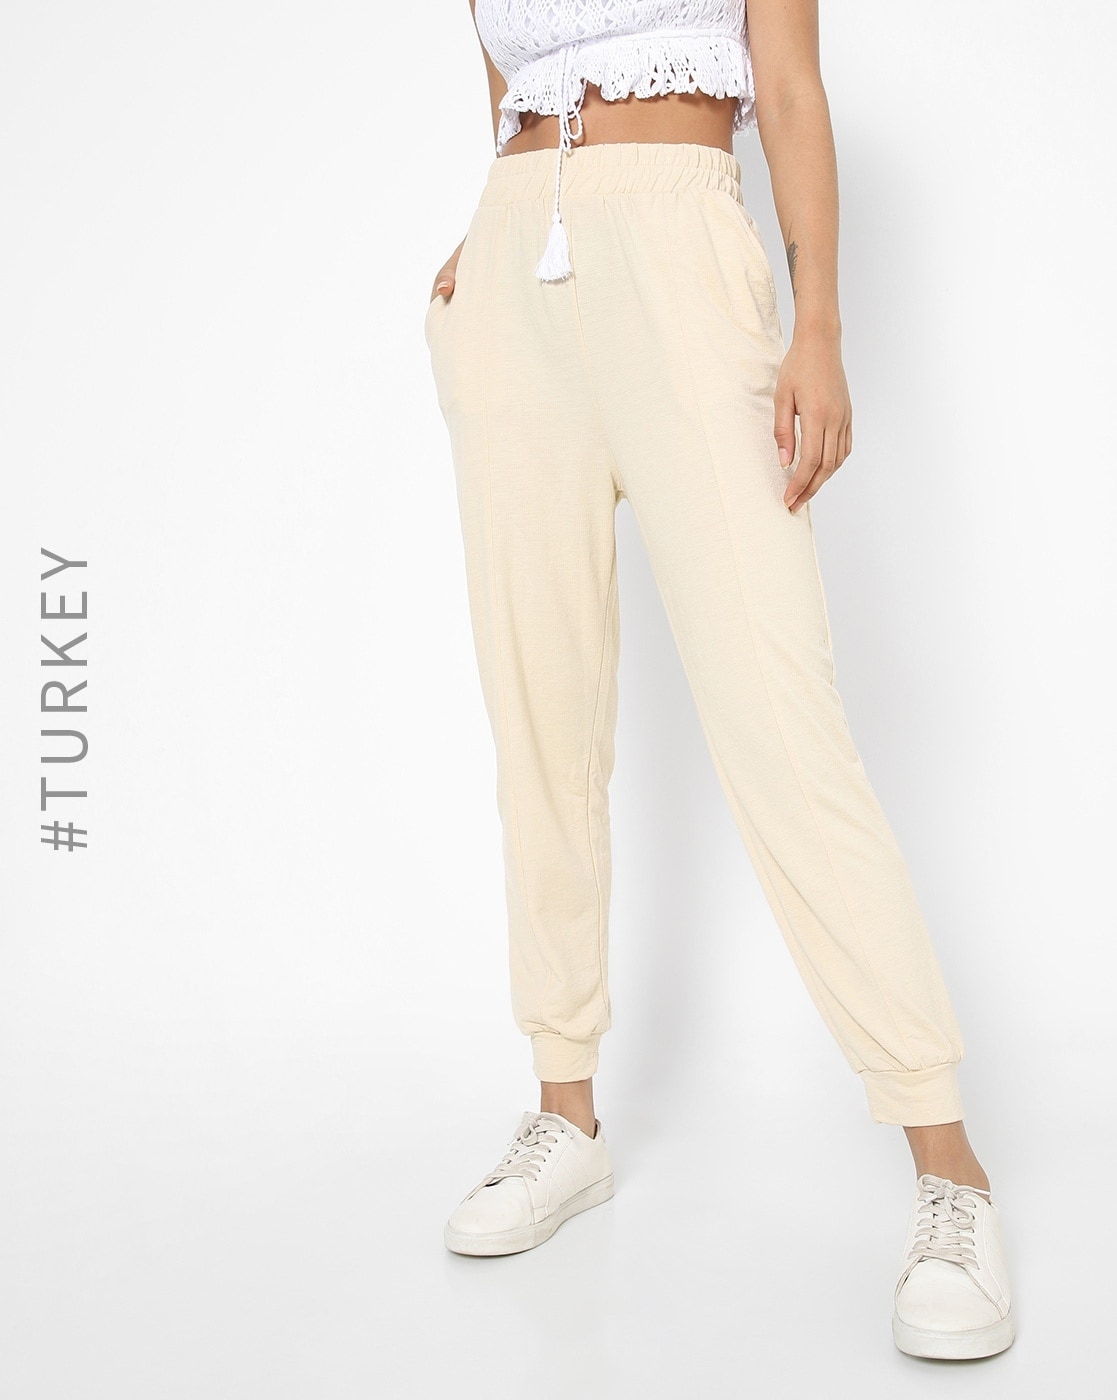 Buy Beige Trousers  Pants for Women by Outryt Online  Ajiocom